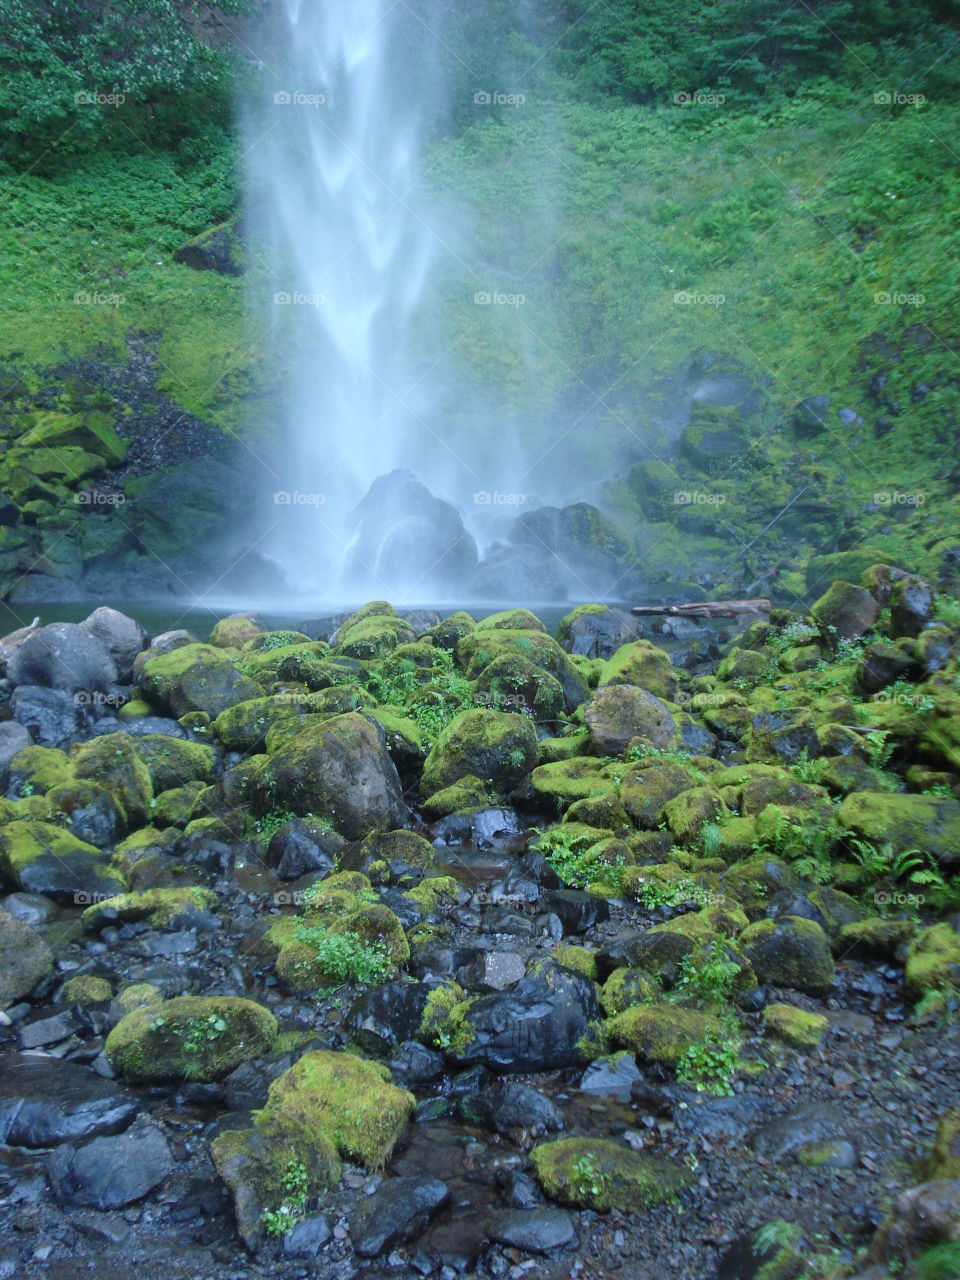  End of Elowah Falls. Down at the bottom of the waterfall at Elowah Falls in Oregon. So green!